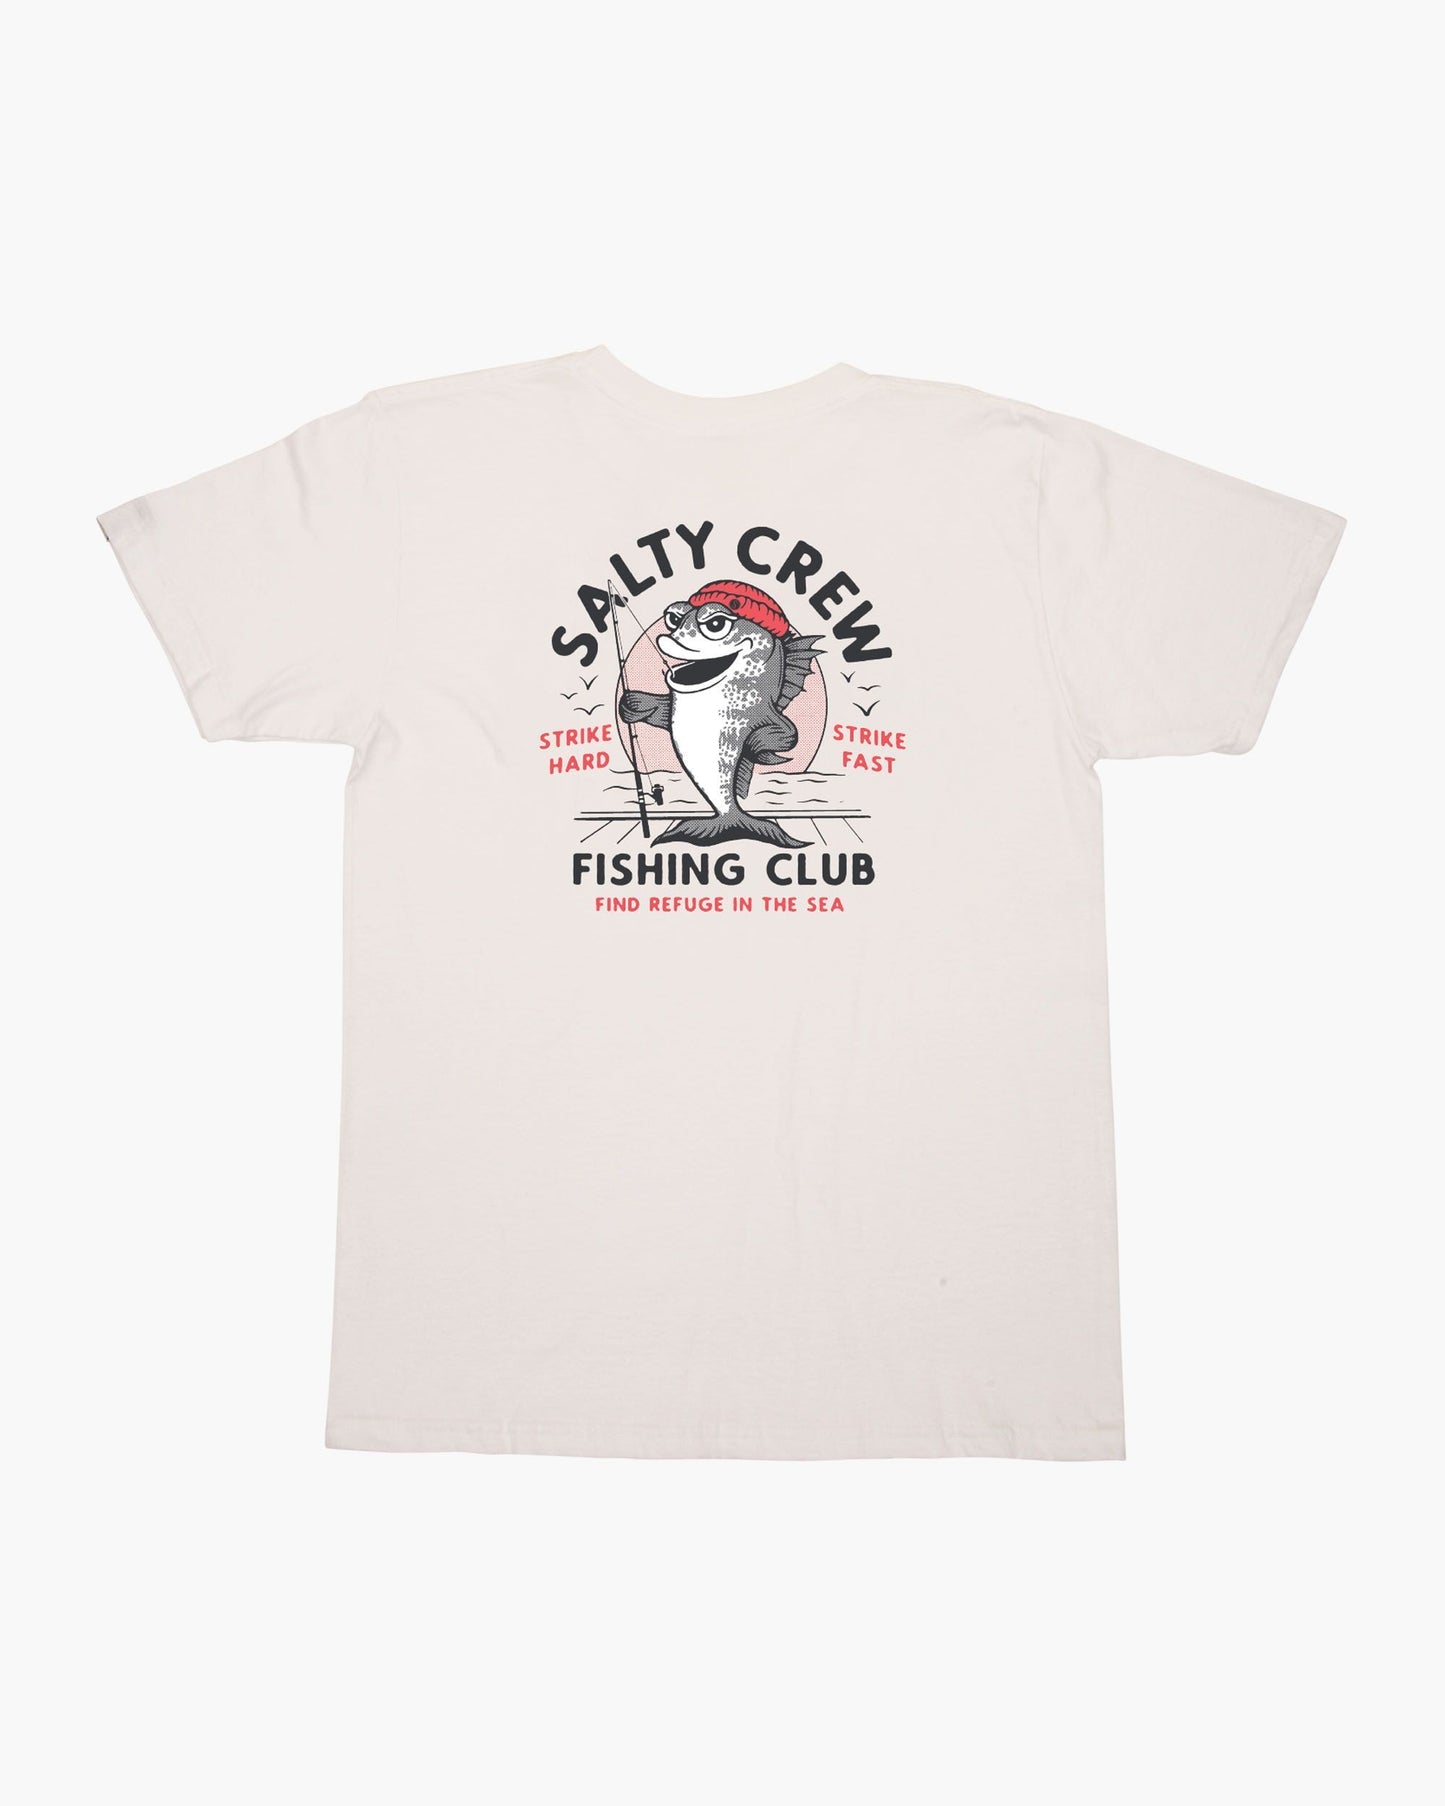 Salty Crew Fishing Club Boys S/s Tee - White – SURF WORLD SURF SHOP